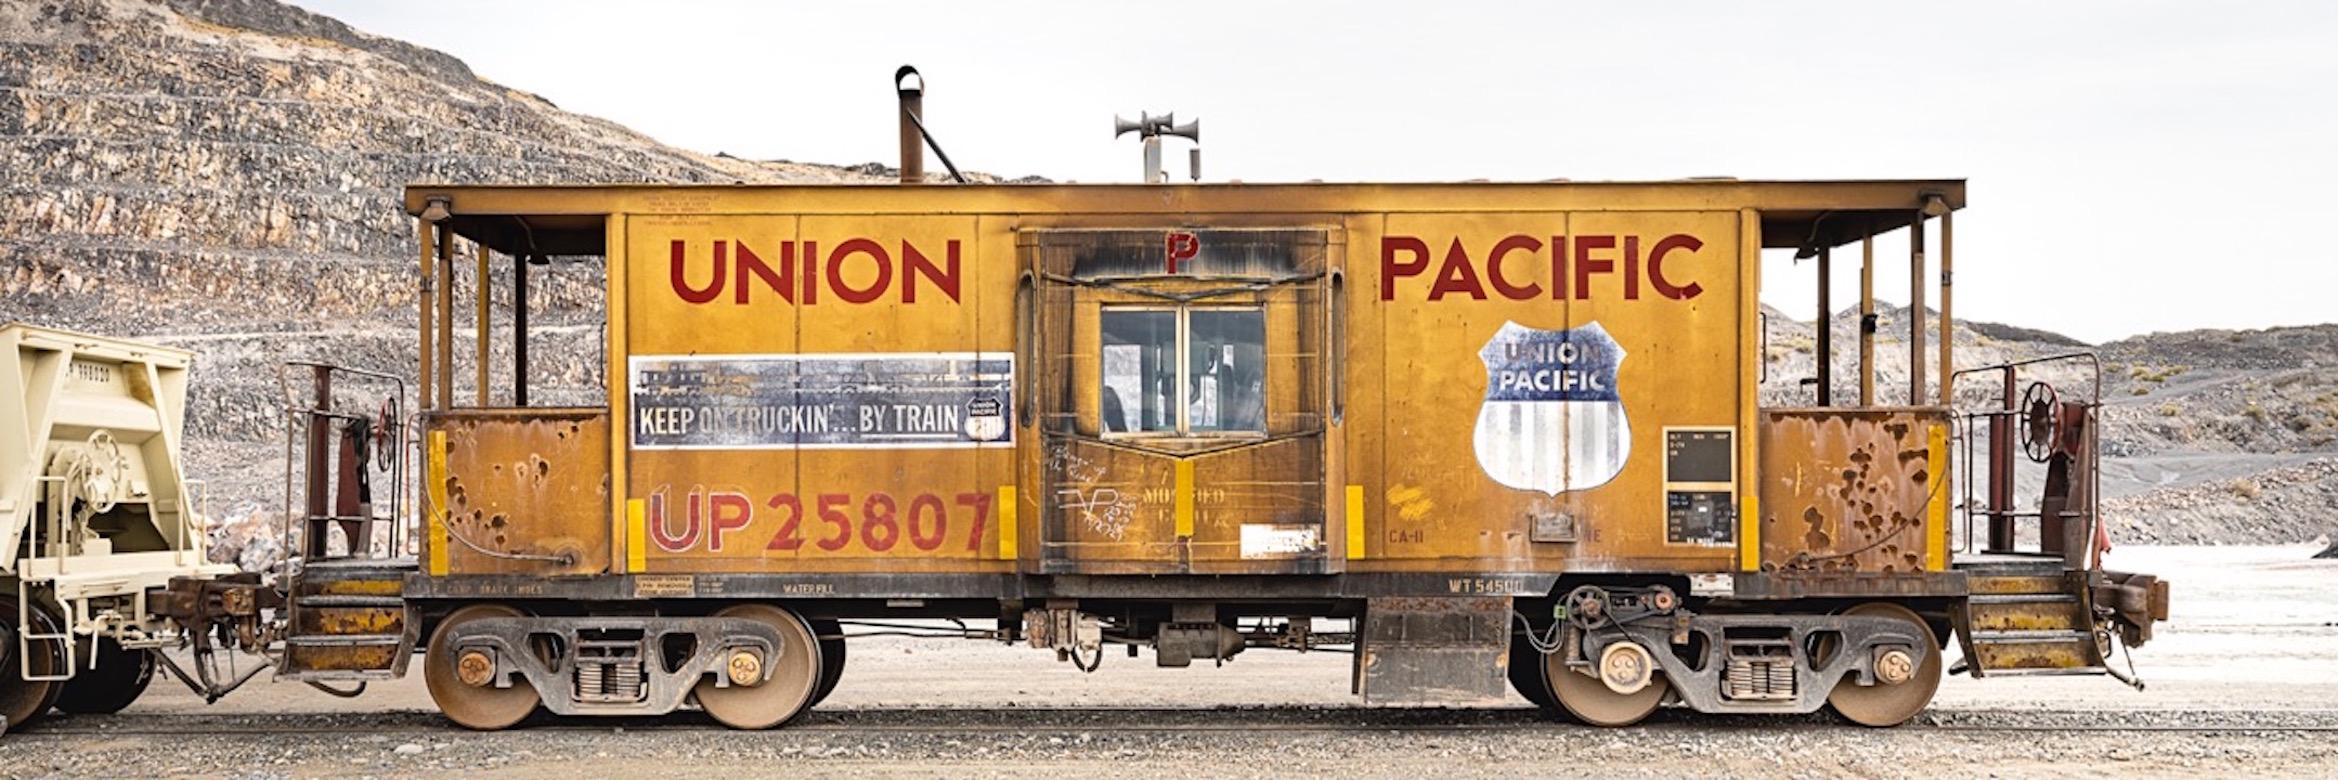 Stephen Mallon Color Photograph - "Caboose UP 25807" Contemporary photograph of railroad train car limited ediiton